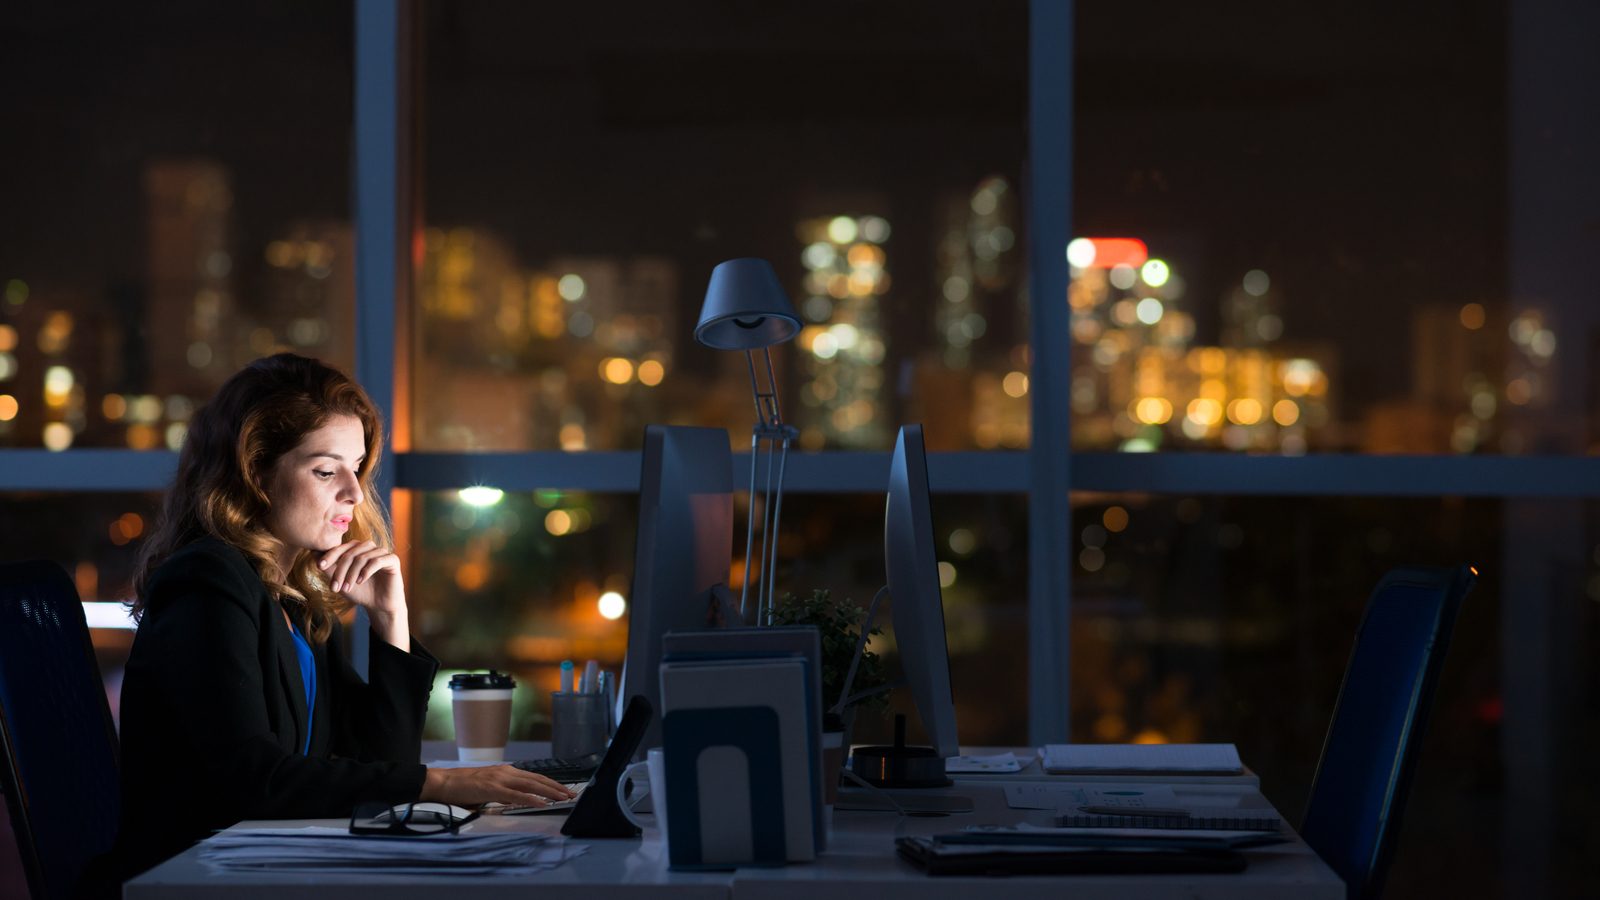 Business woman working alone in dark office